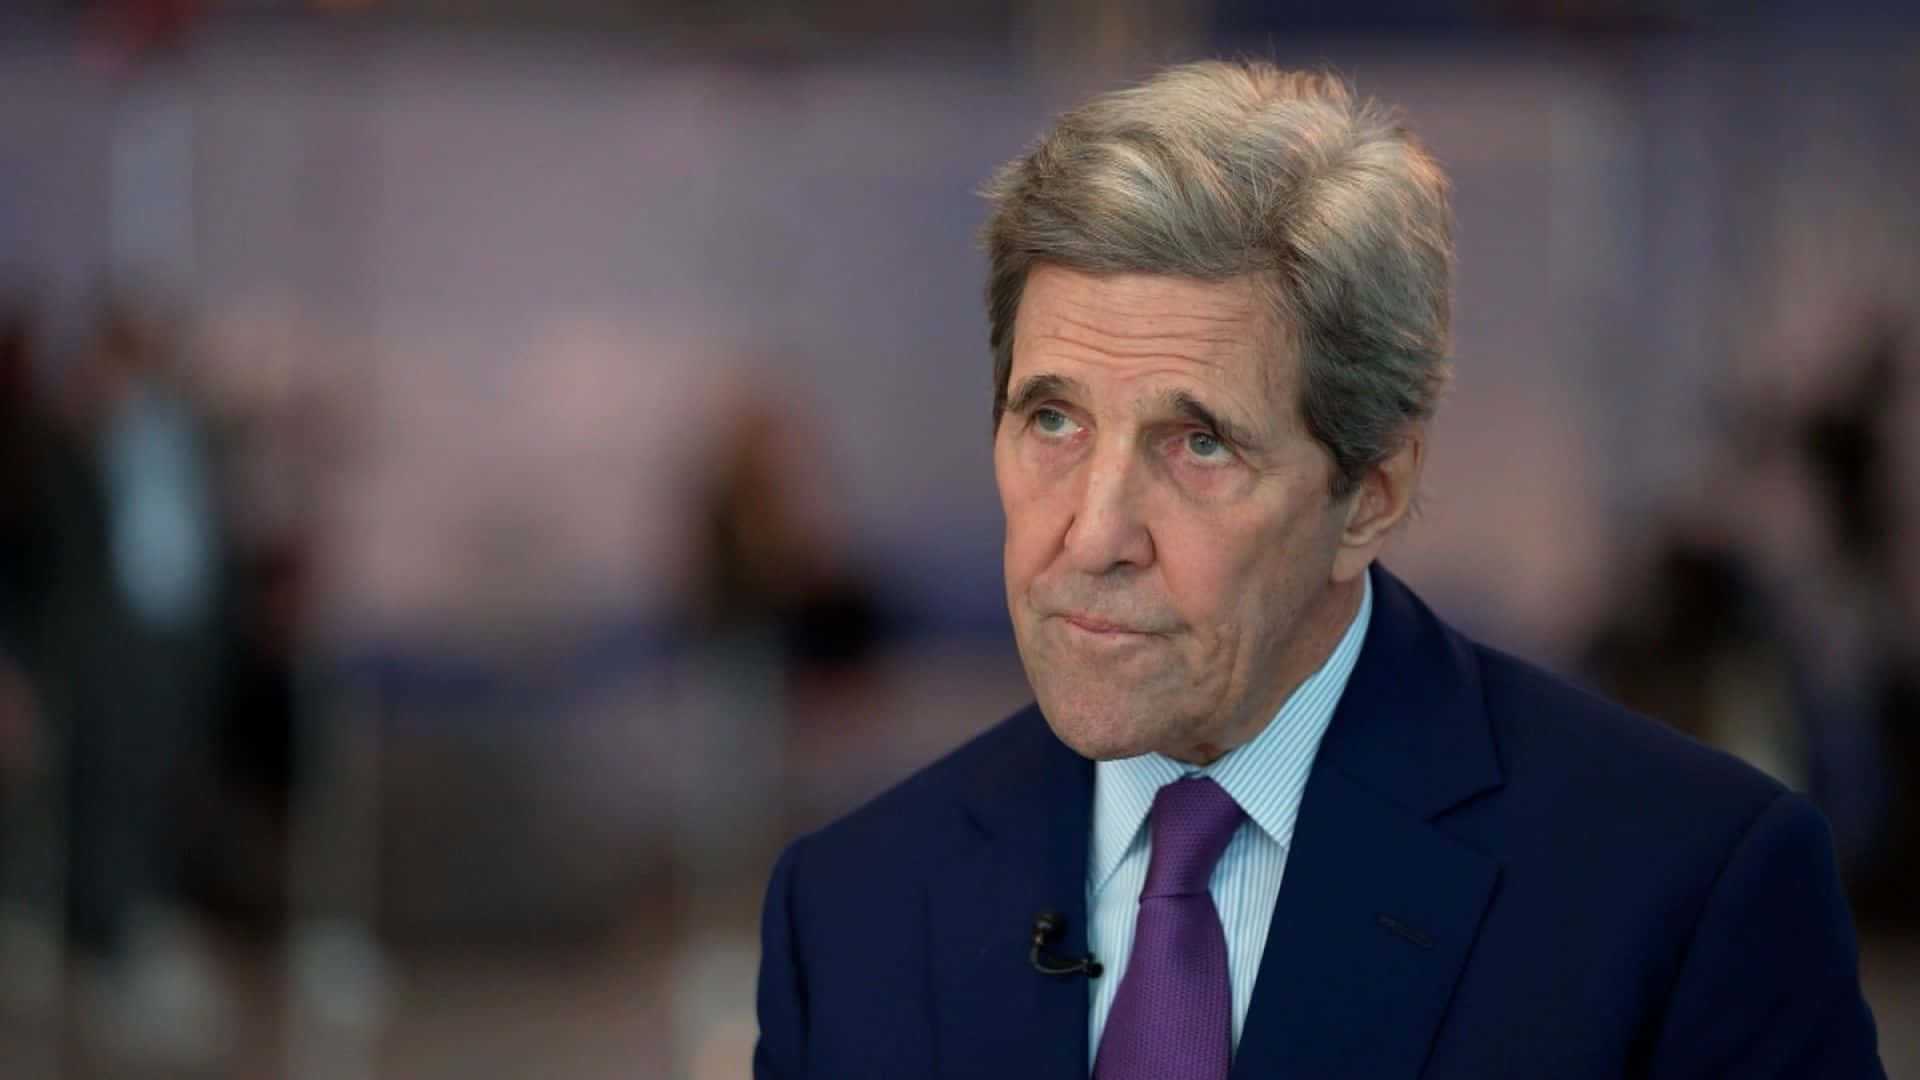 John Kerry Speaking On Cnn Wallpaper